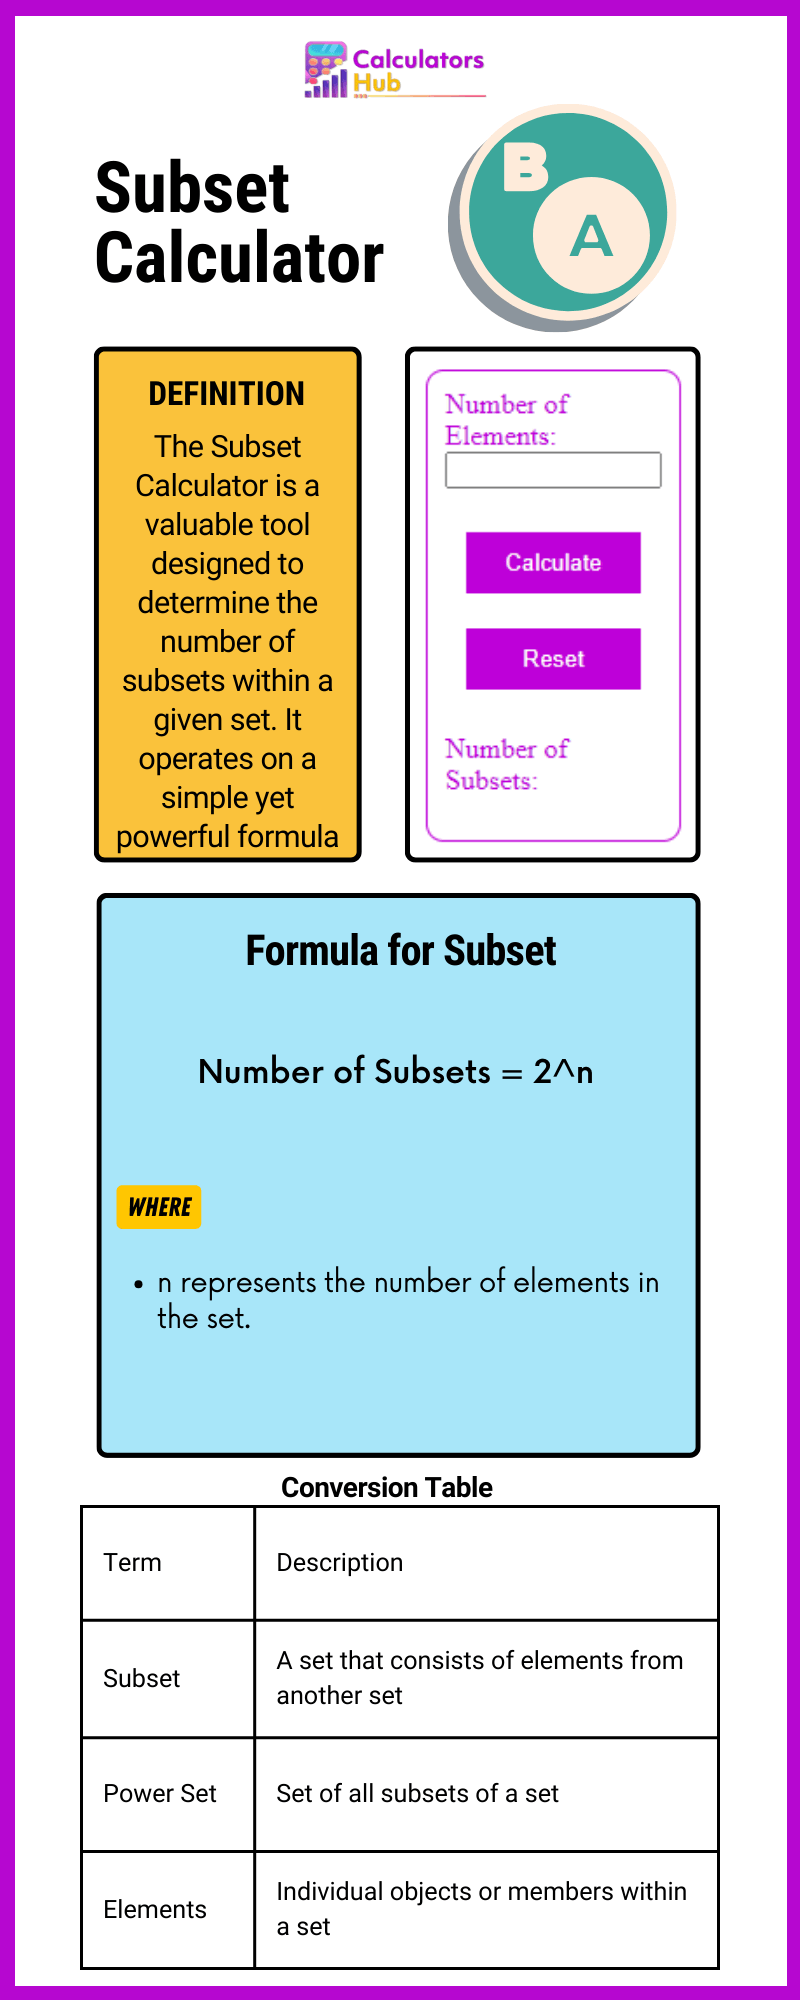 Subset Calculator